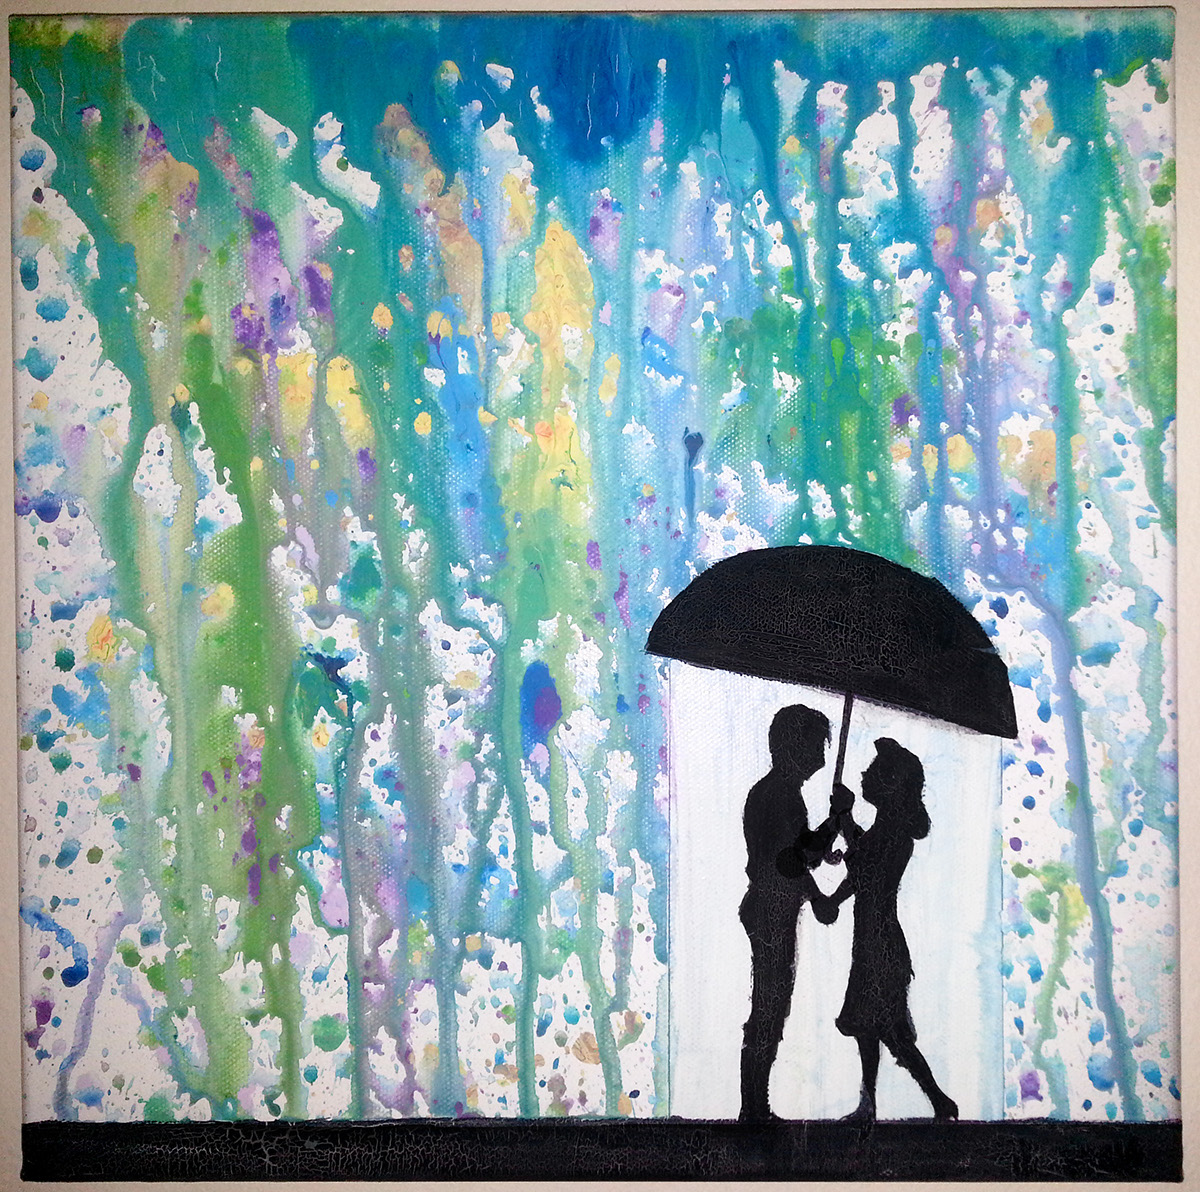 colorful acrylic paint canvas rain Umbrella sihouette Pinterest couple mulitcolor abstract surreal